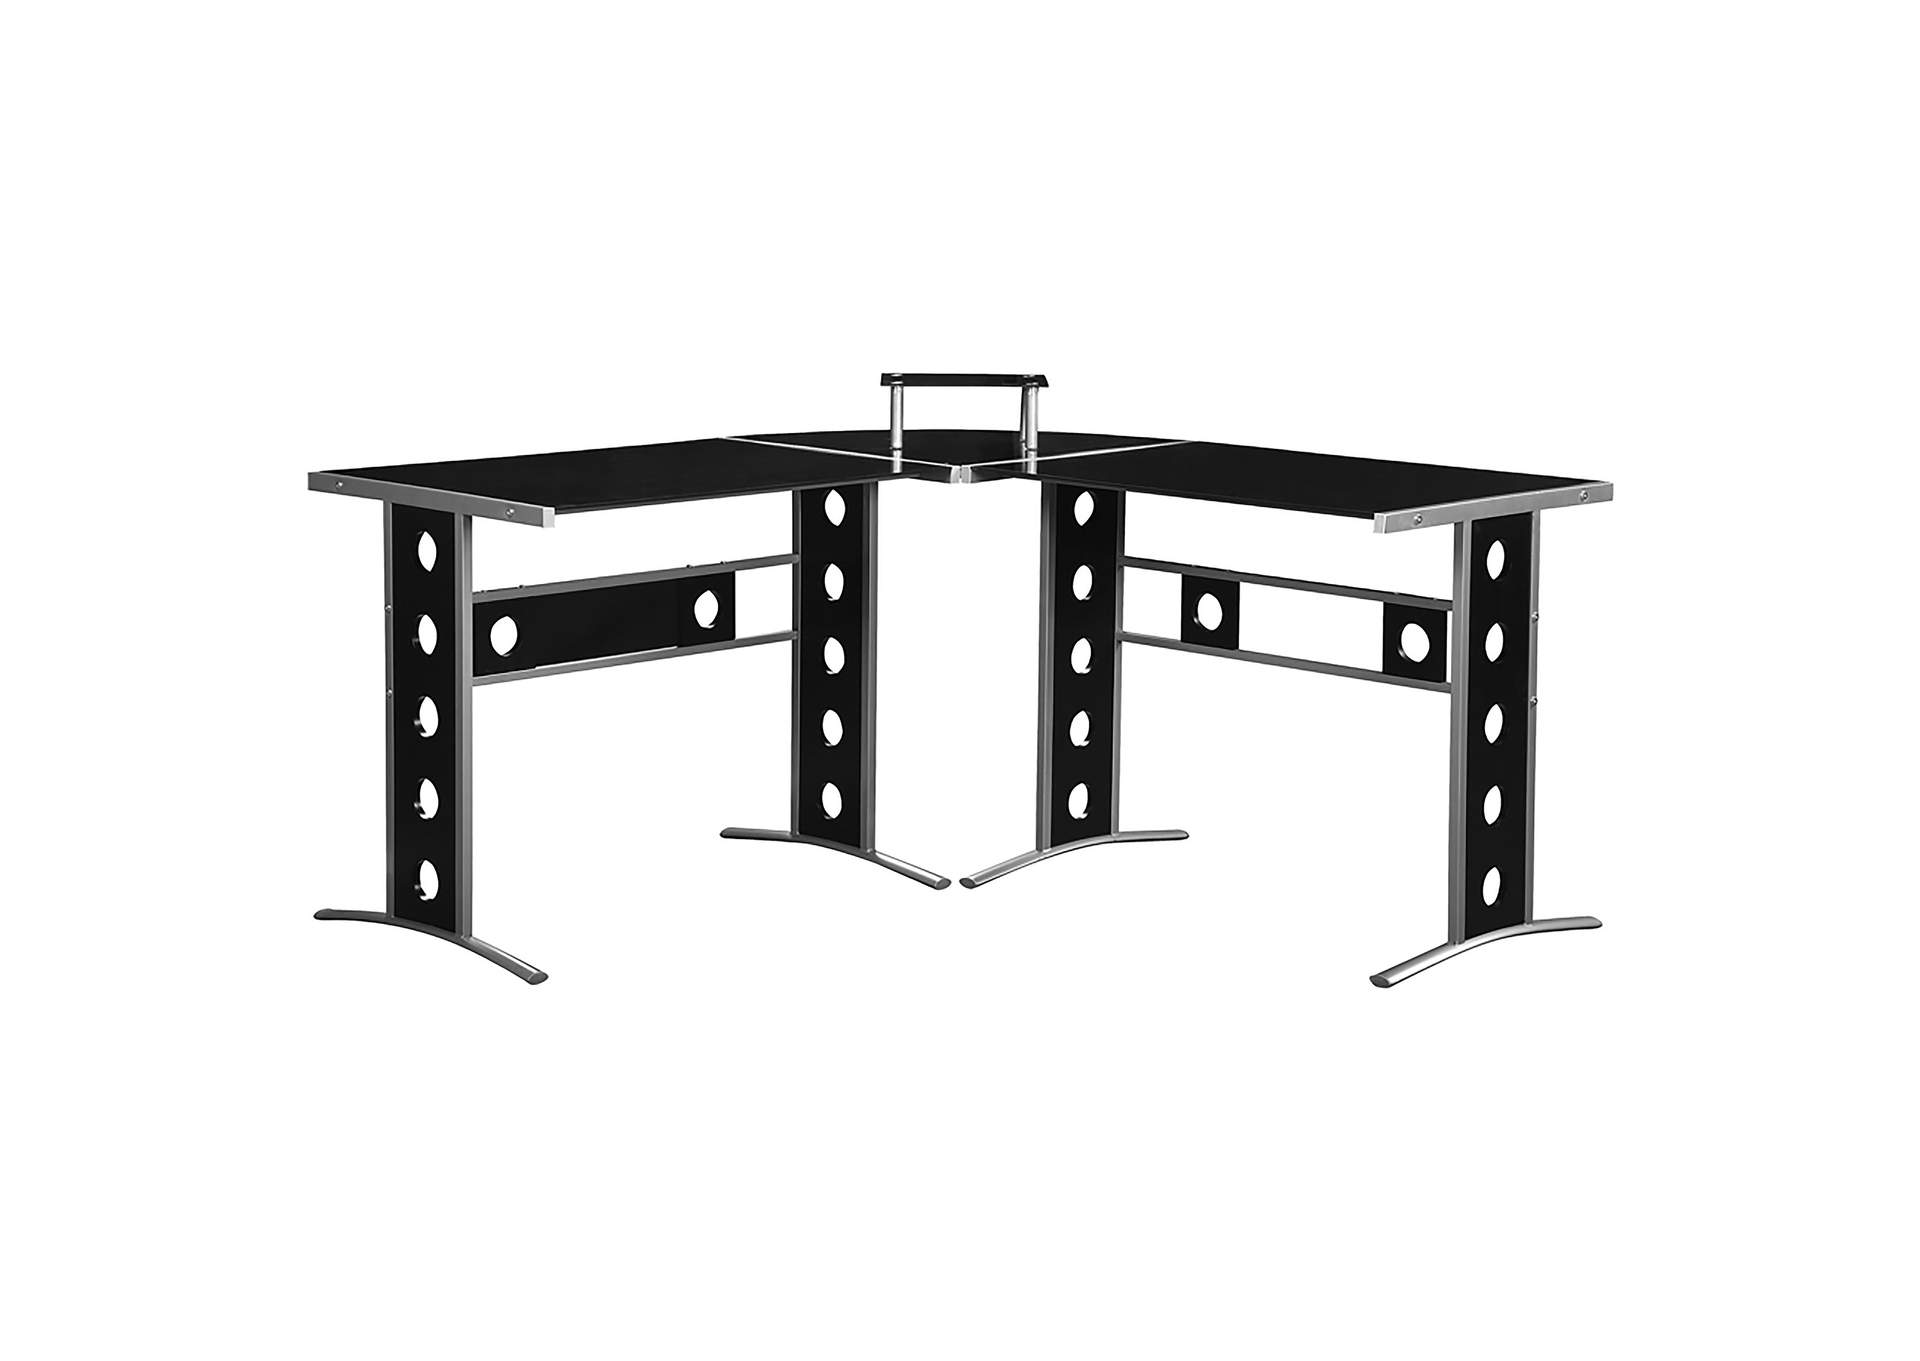 Keizer 3-piece L-shape Office Desk Set Black and Silver,Coaster Furniture